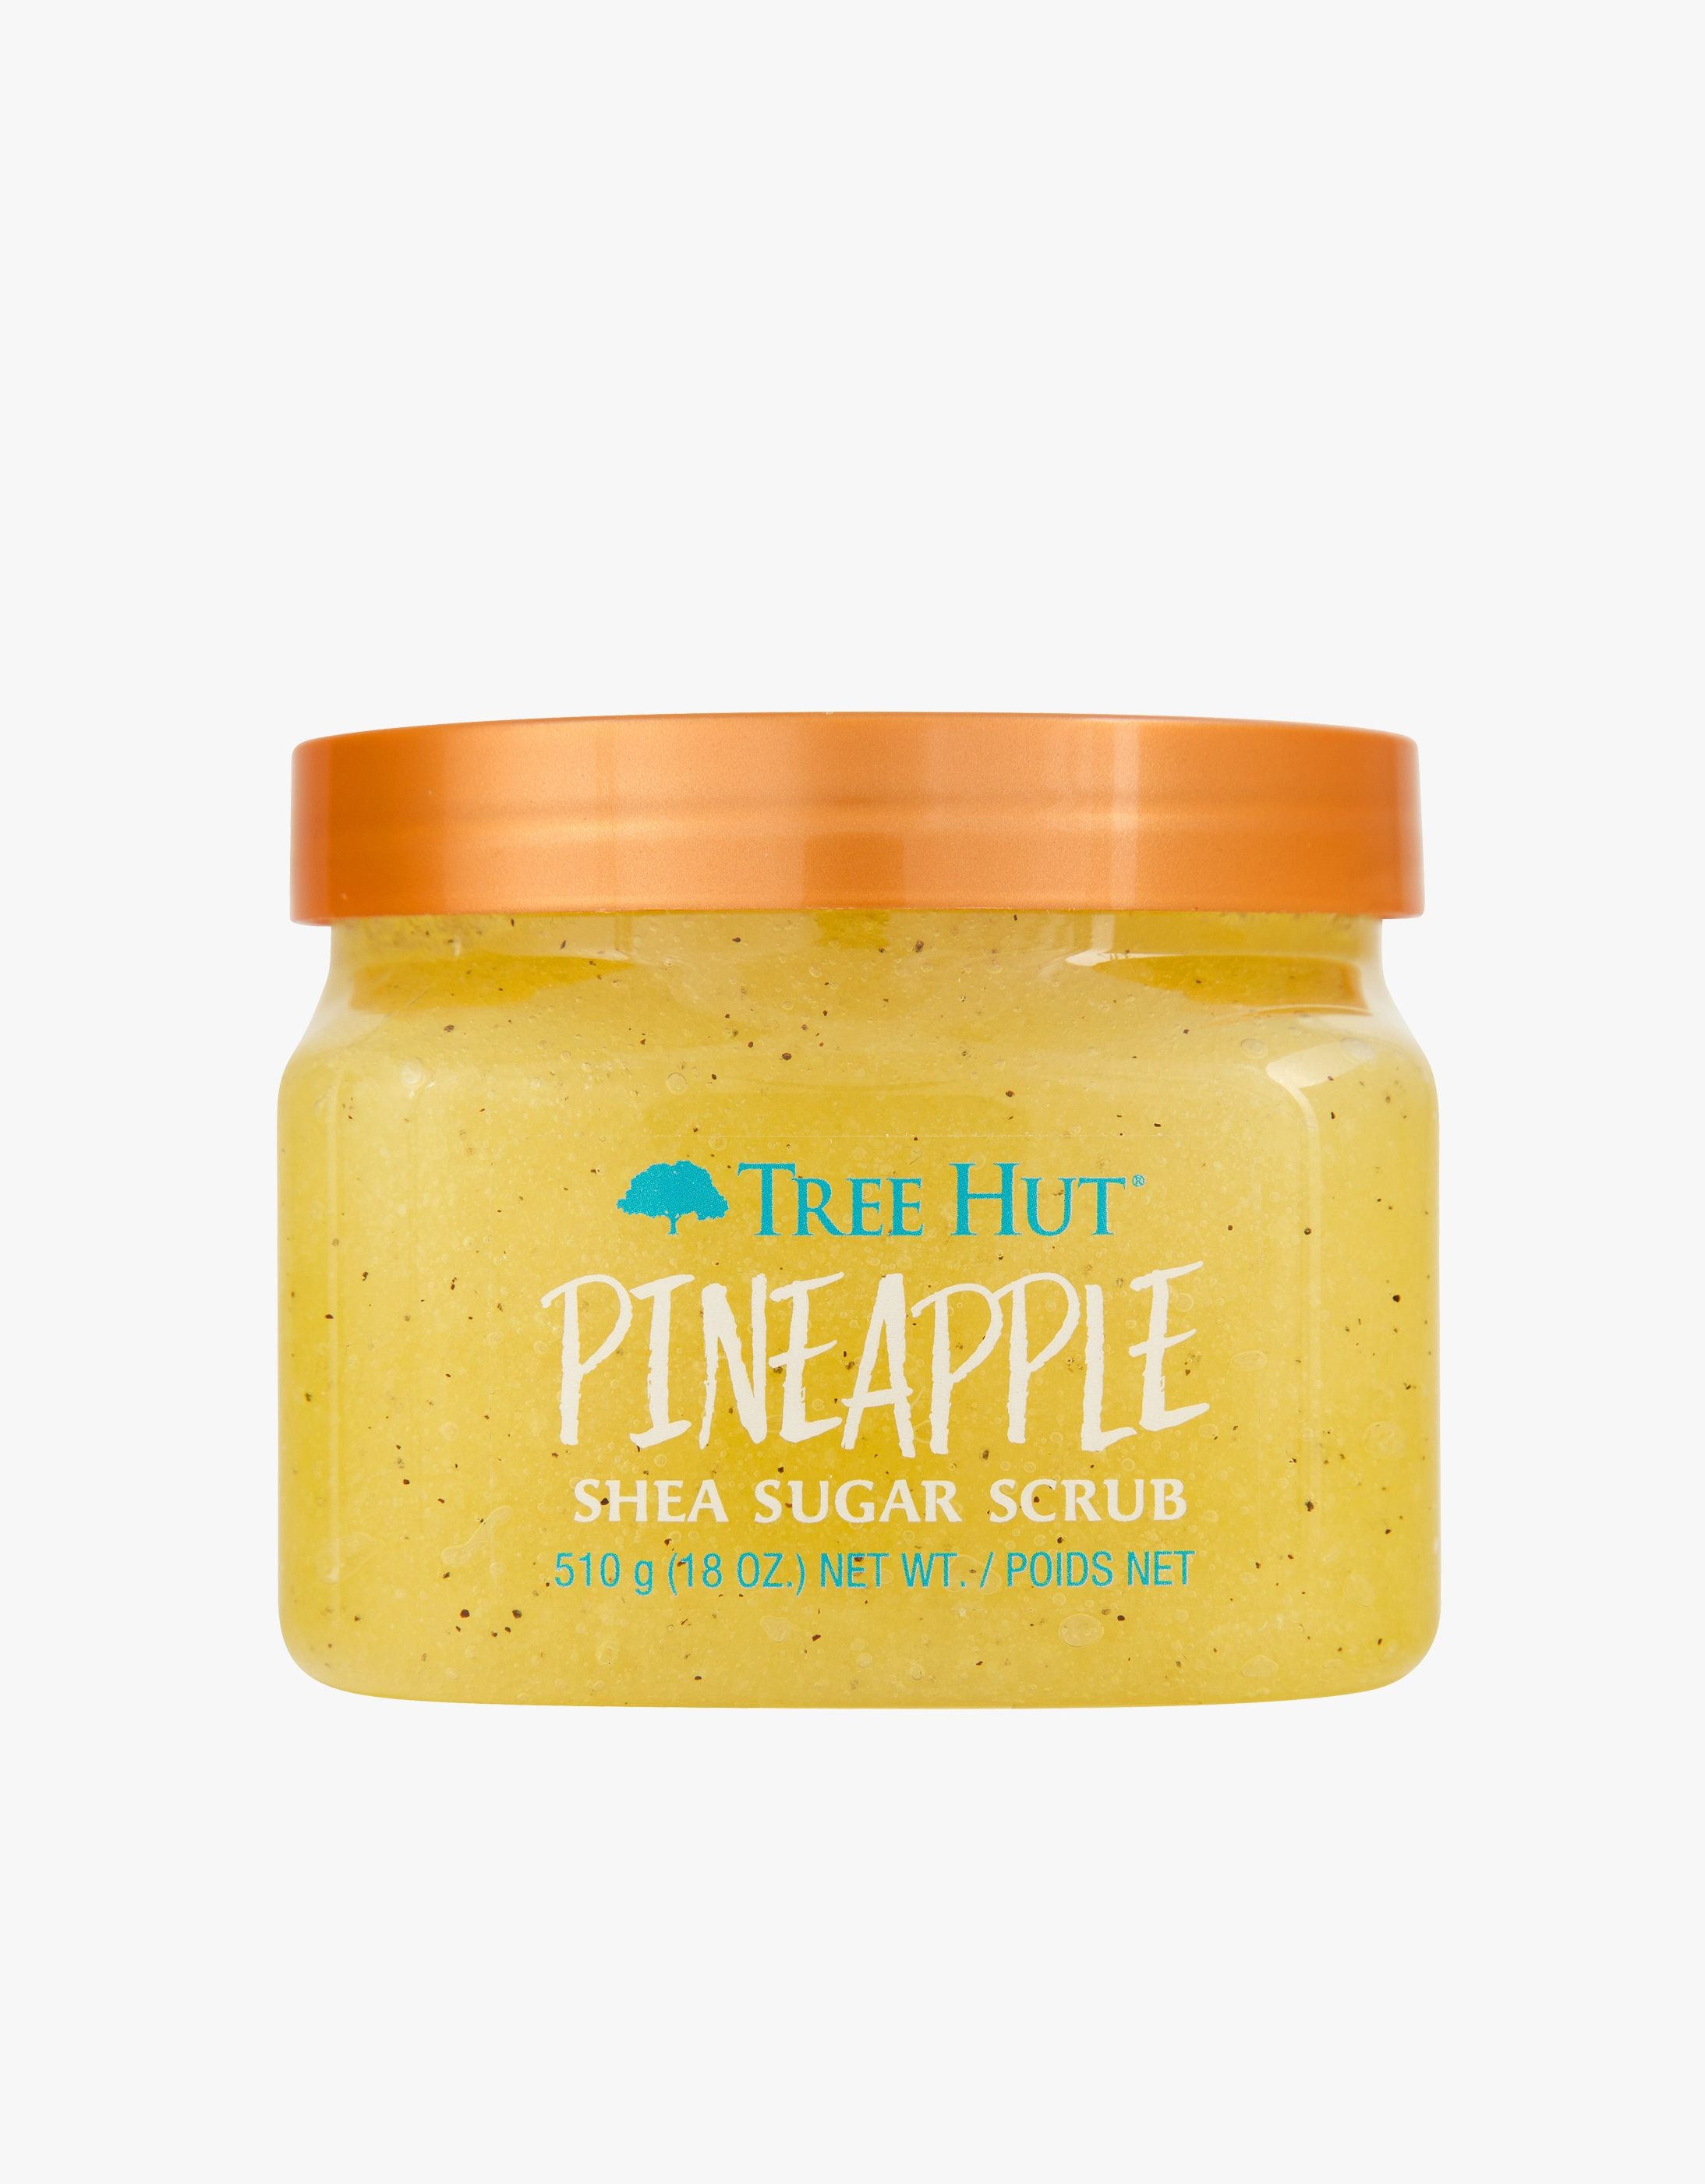 Pineapple Shea Sugar Scrub